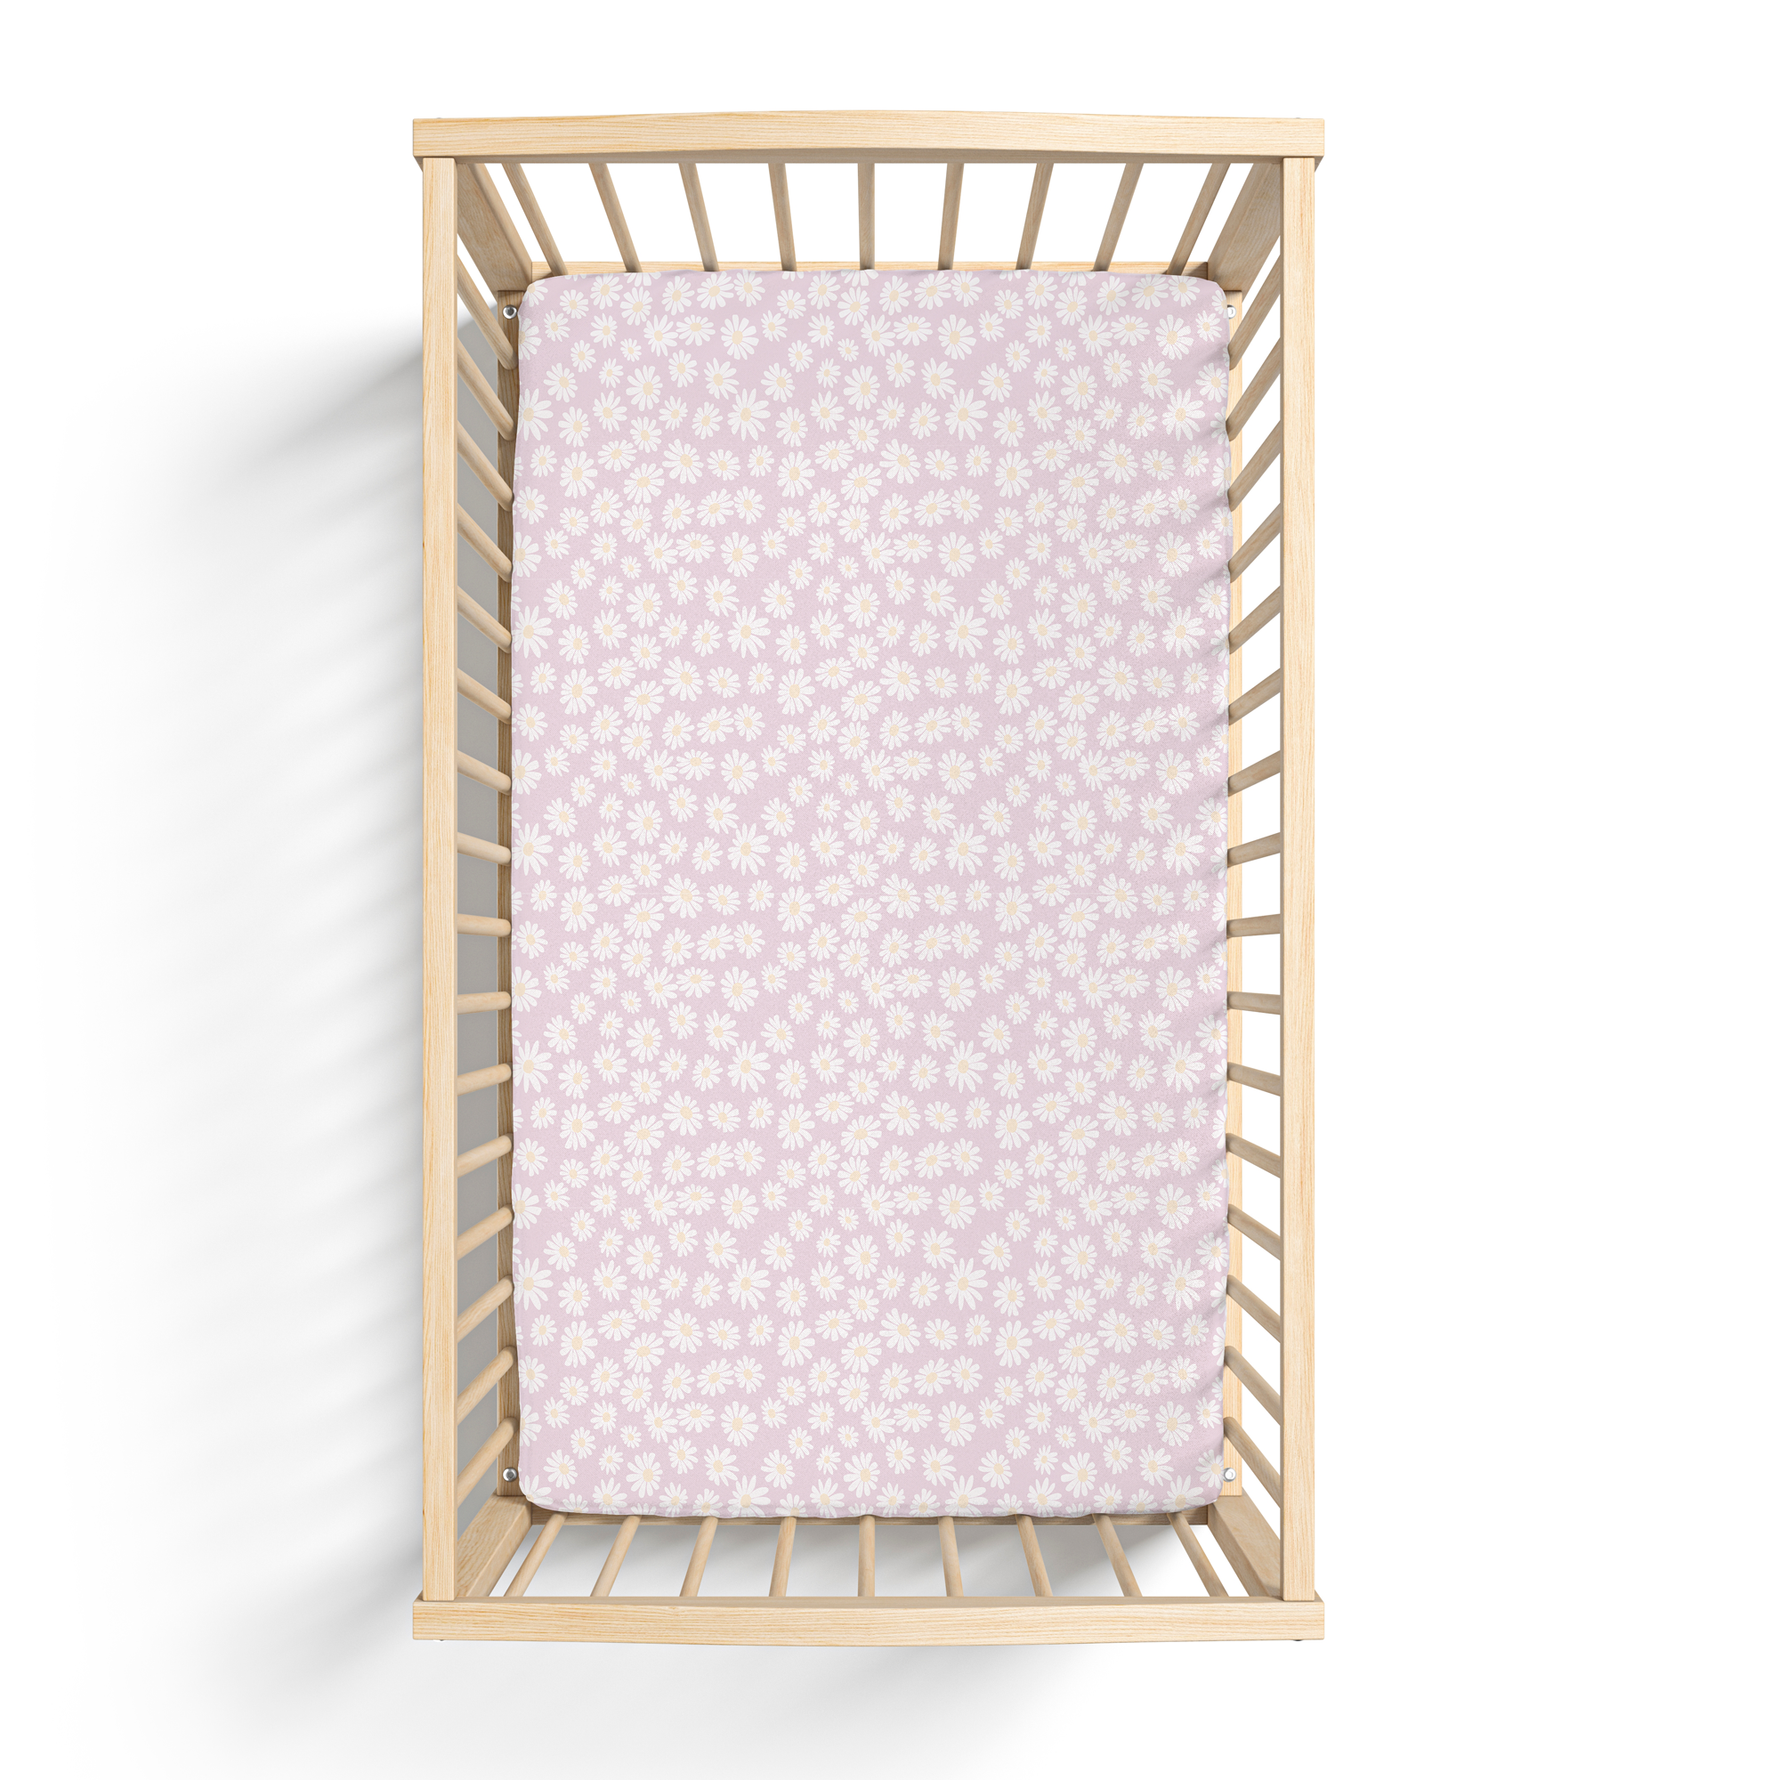 Daisy Dreams Forever Crib Sheet - Lindsay Ann Artistry